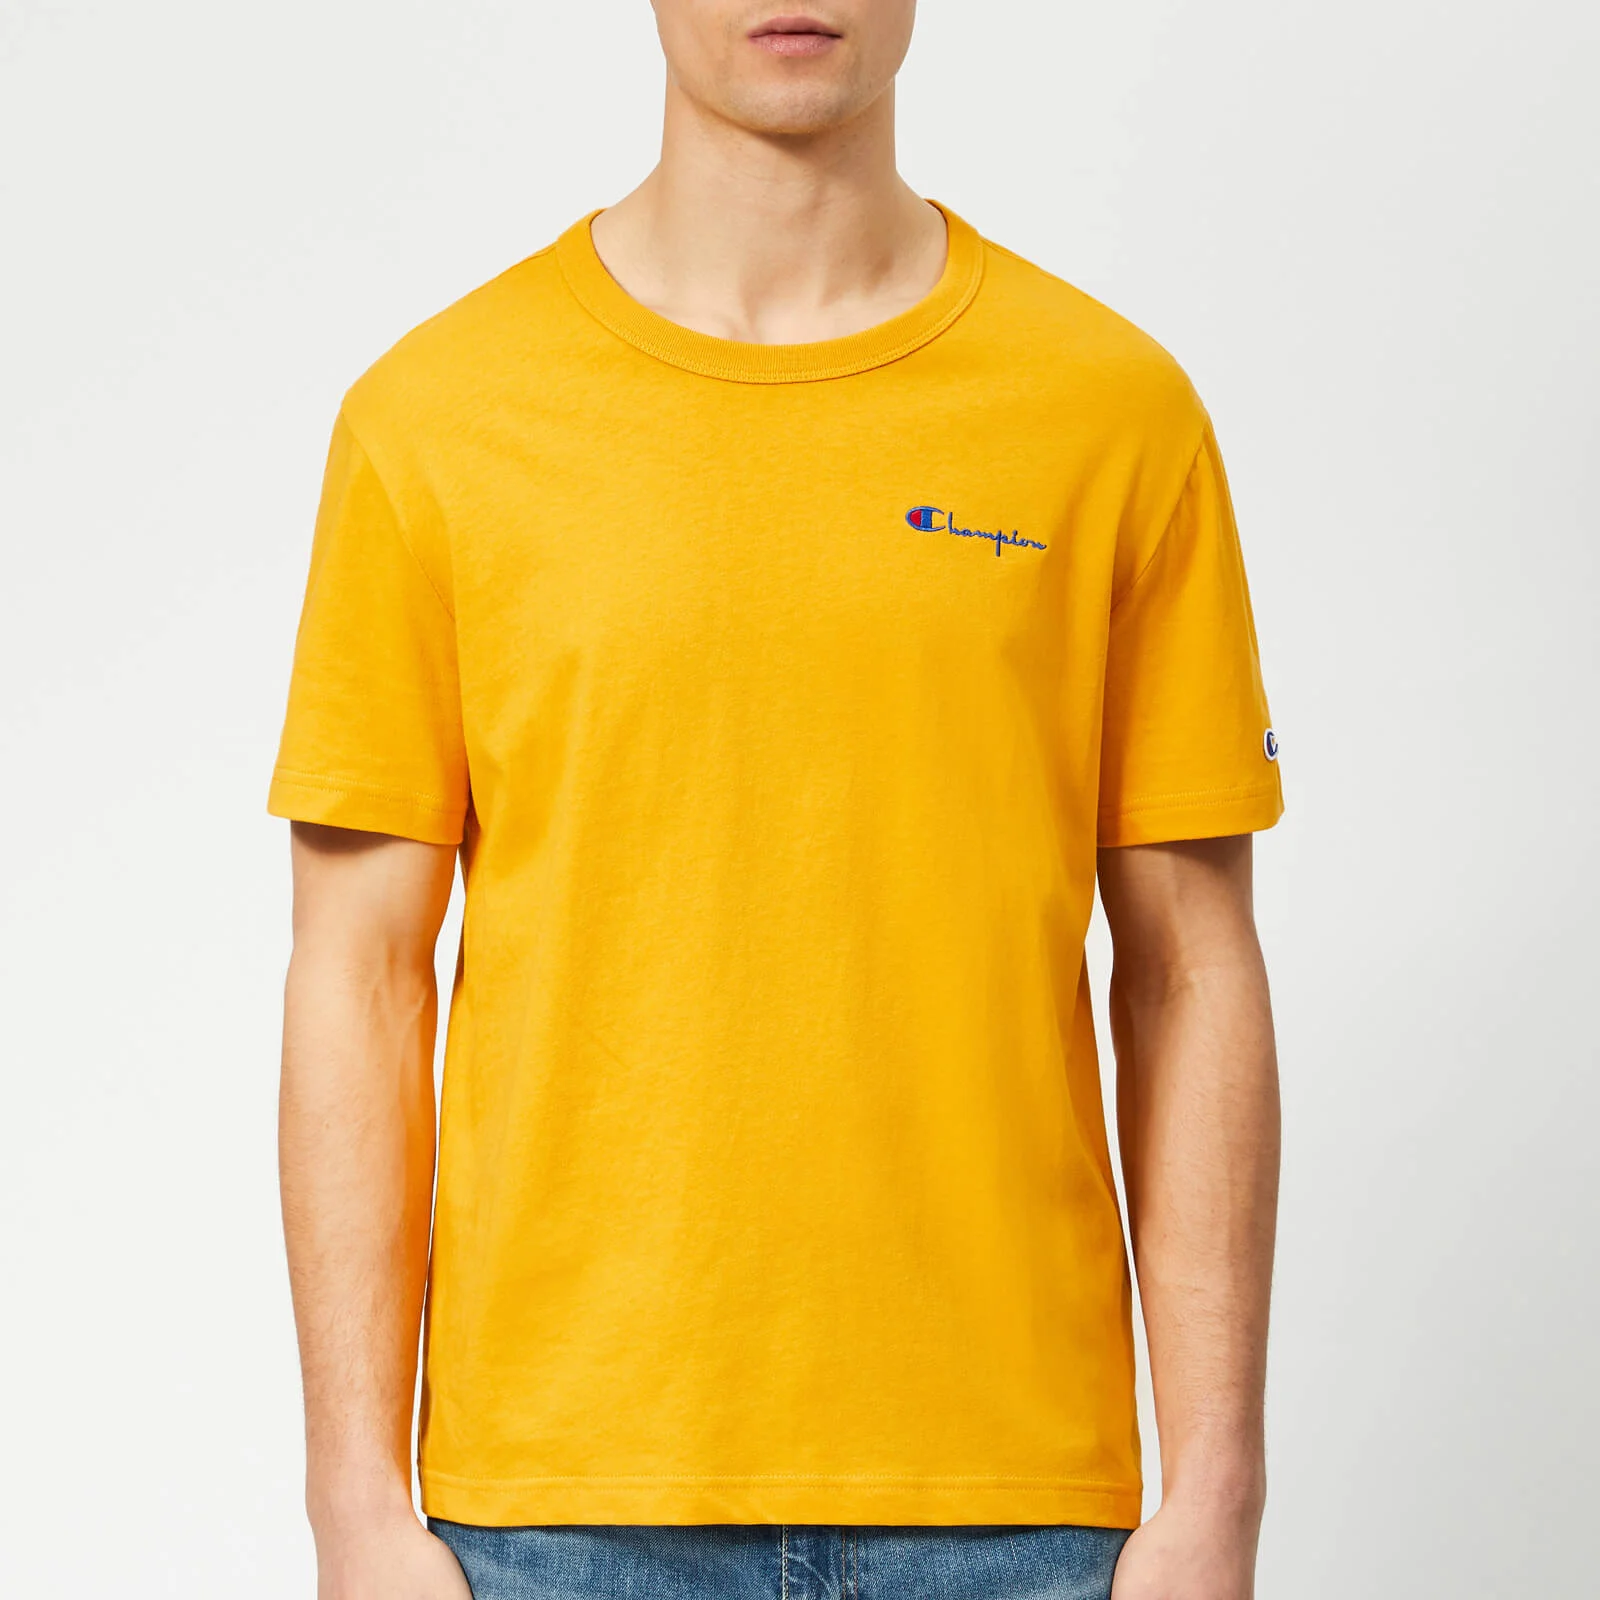 Champion Men's Small Script T-Shirt - Gold Image 1